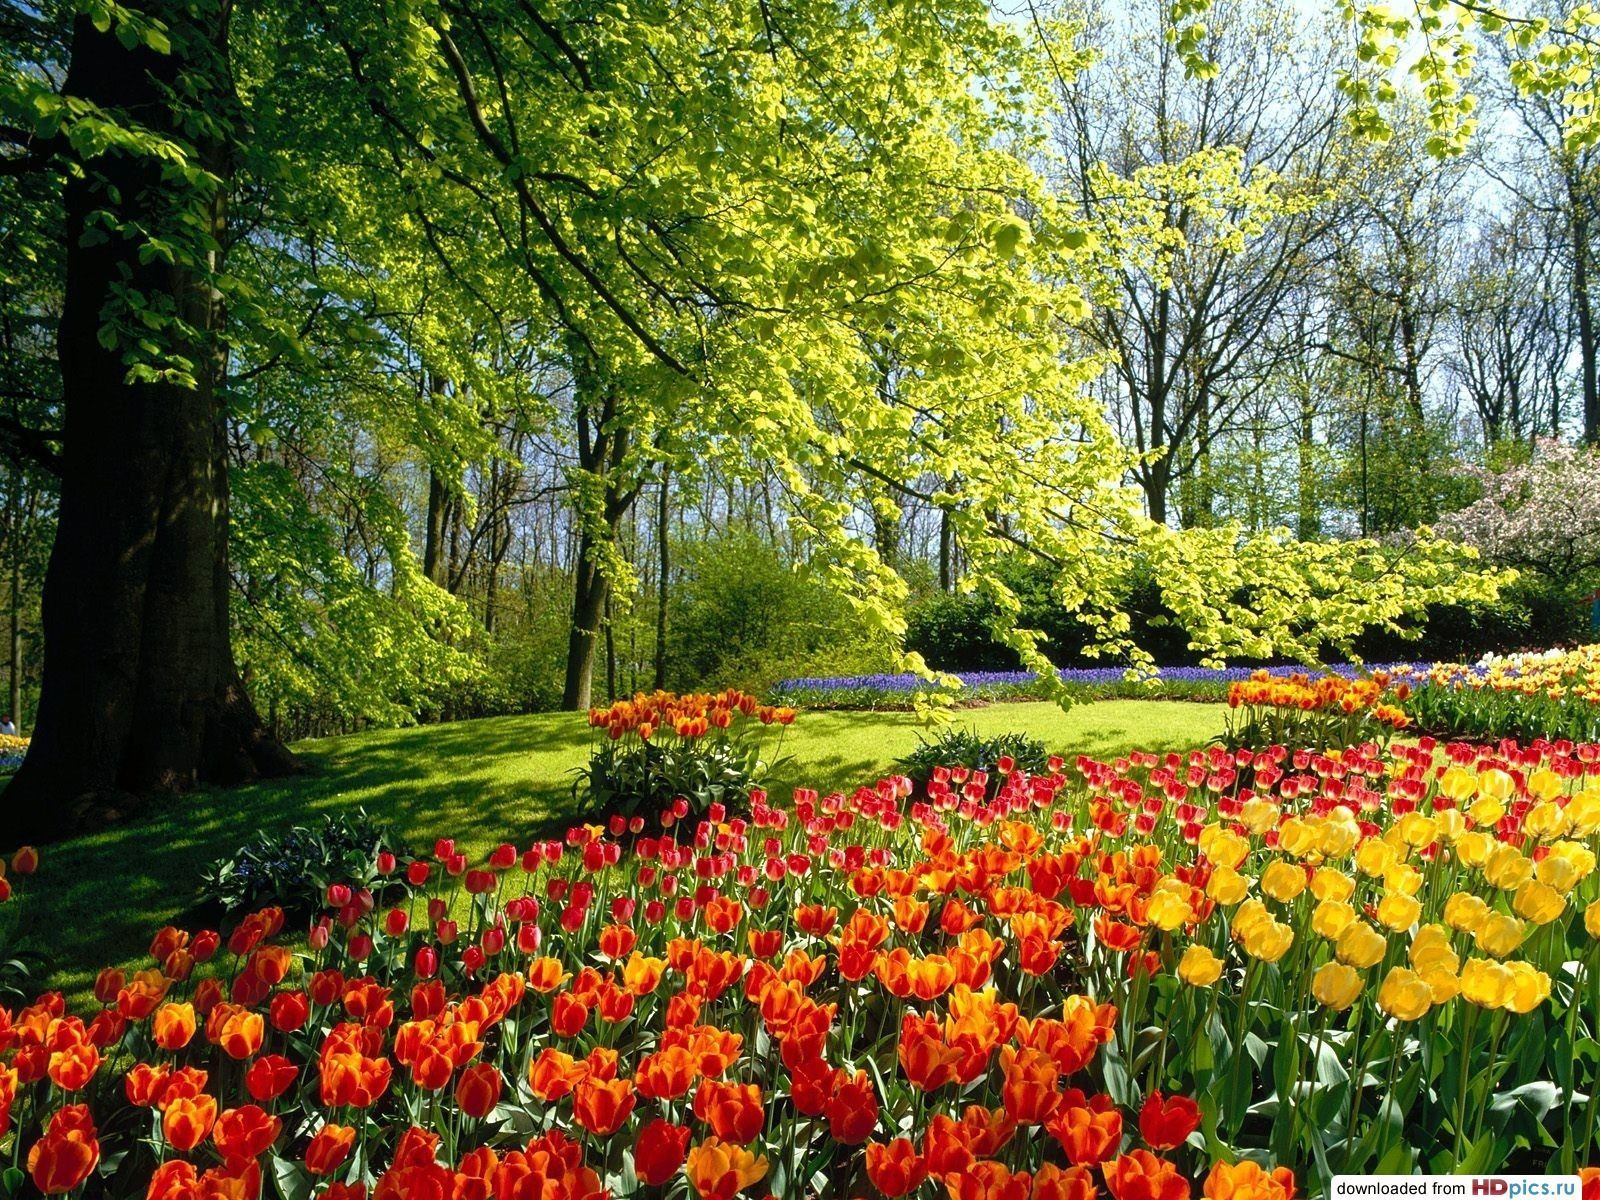 The Most Beautiful Garden in Europe. Beautiful